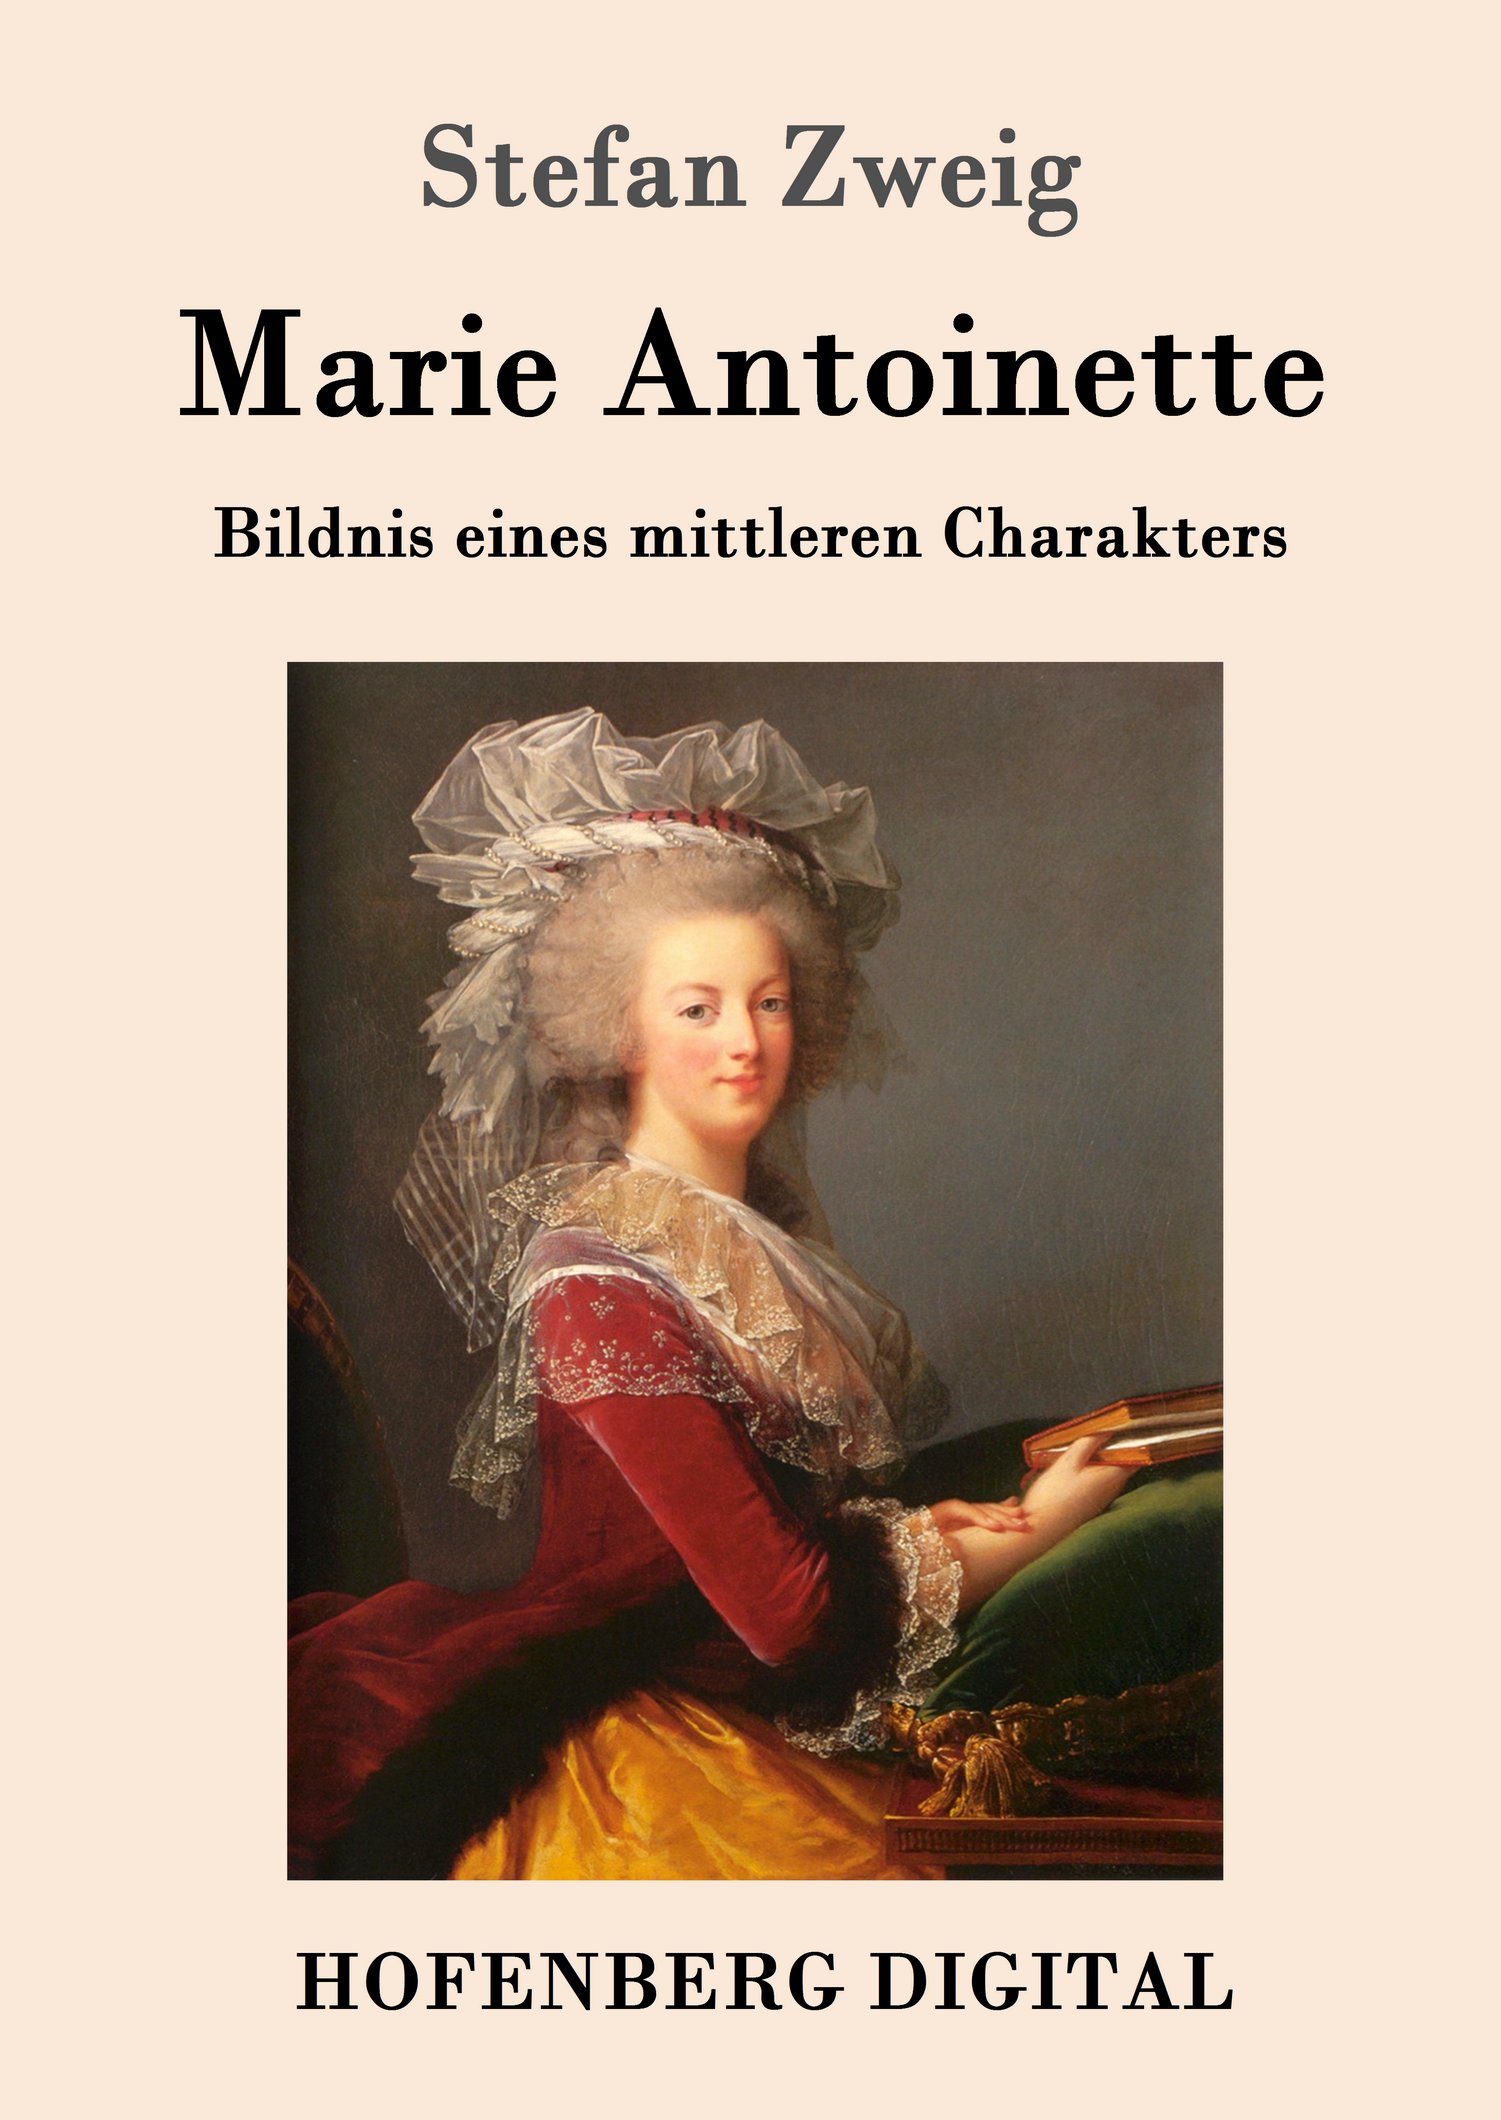 Stefan Zweig: Marie Antoinette